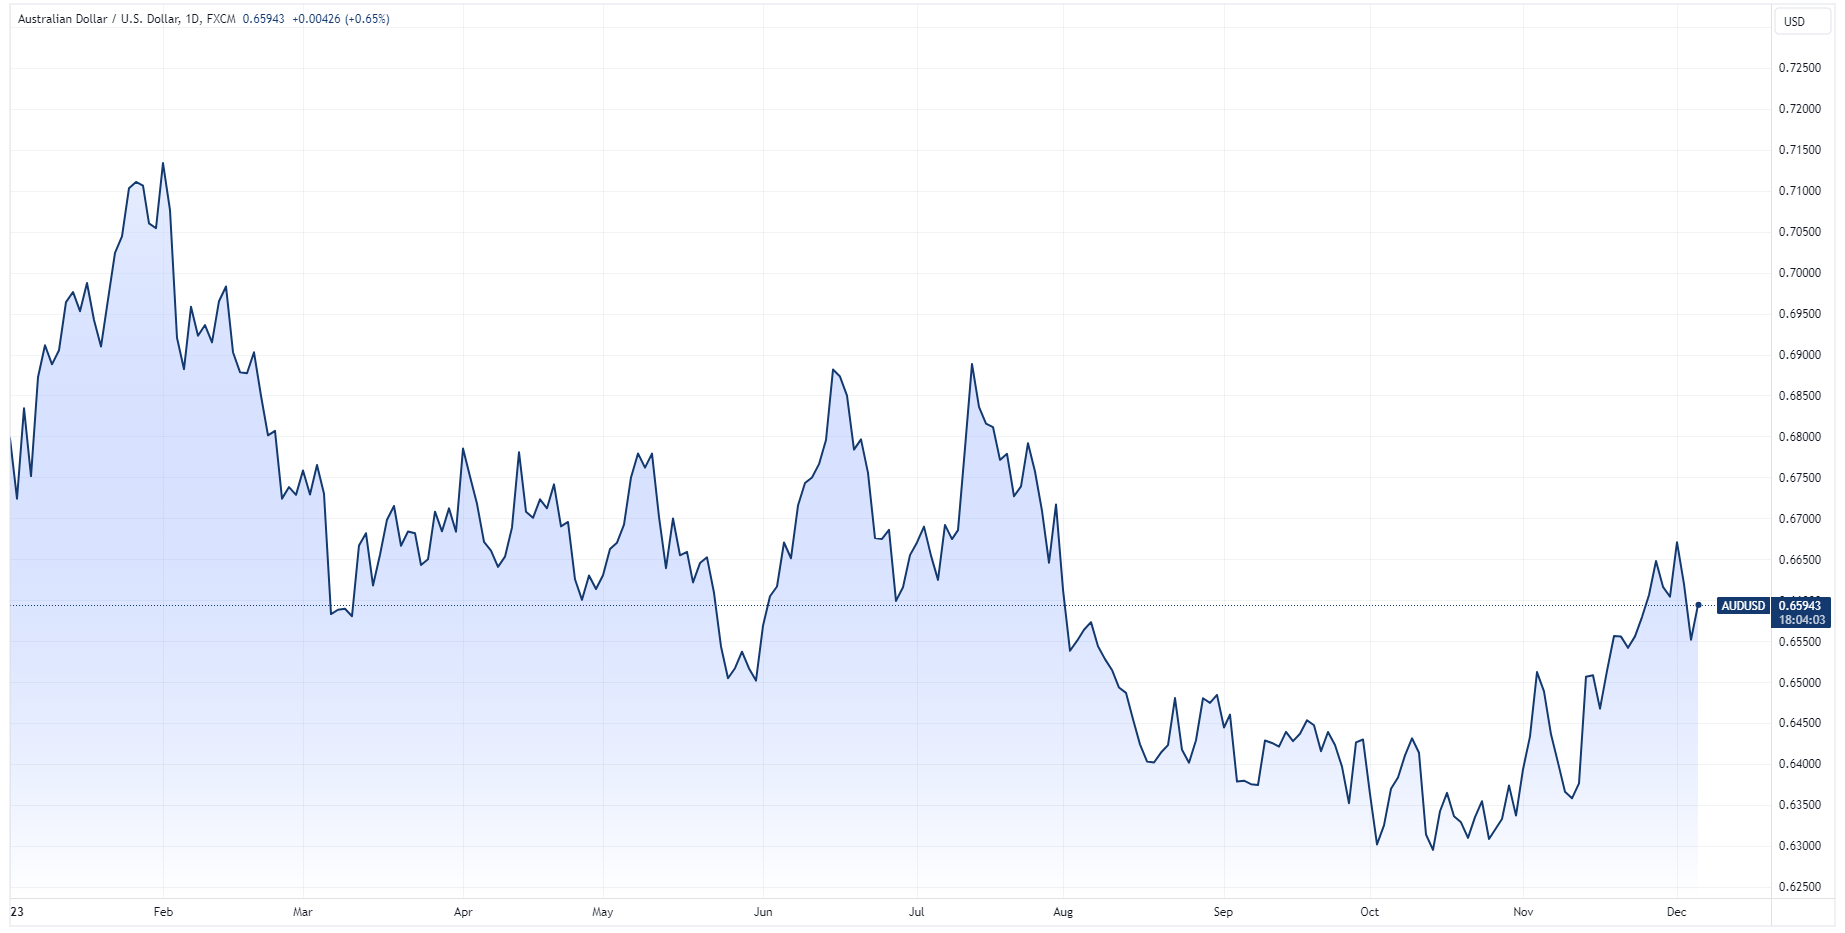 Australia Dollar / US Dollar year-to-date chart (Source: TradingView)